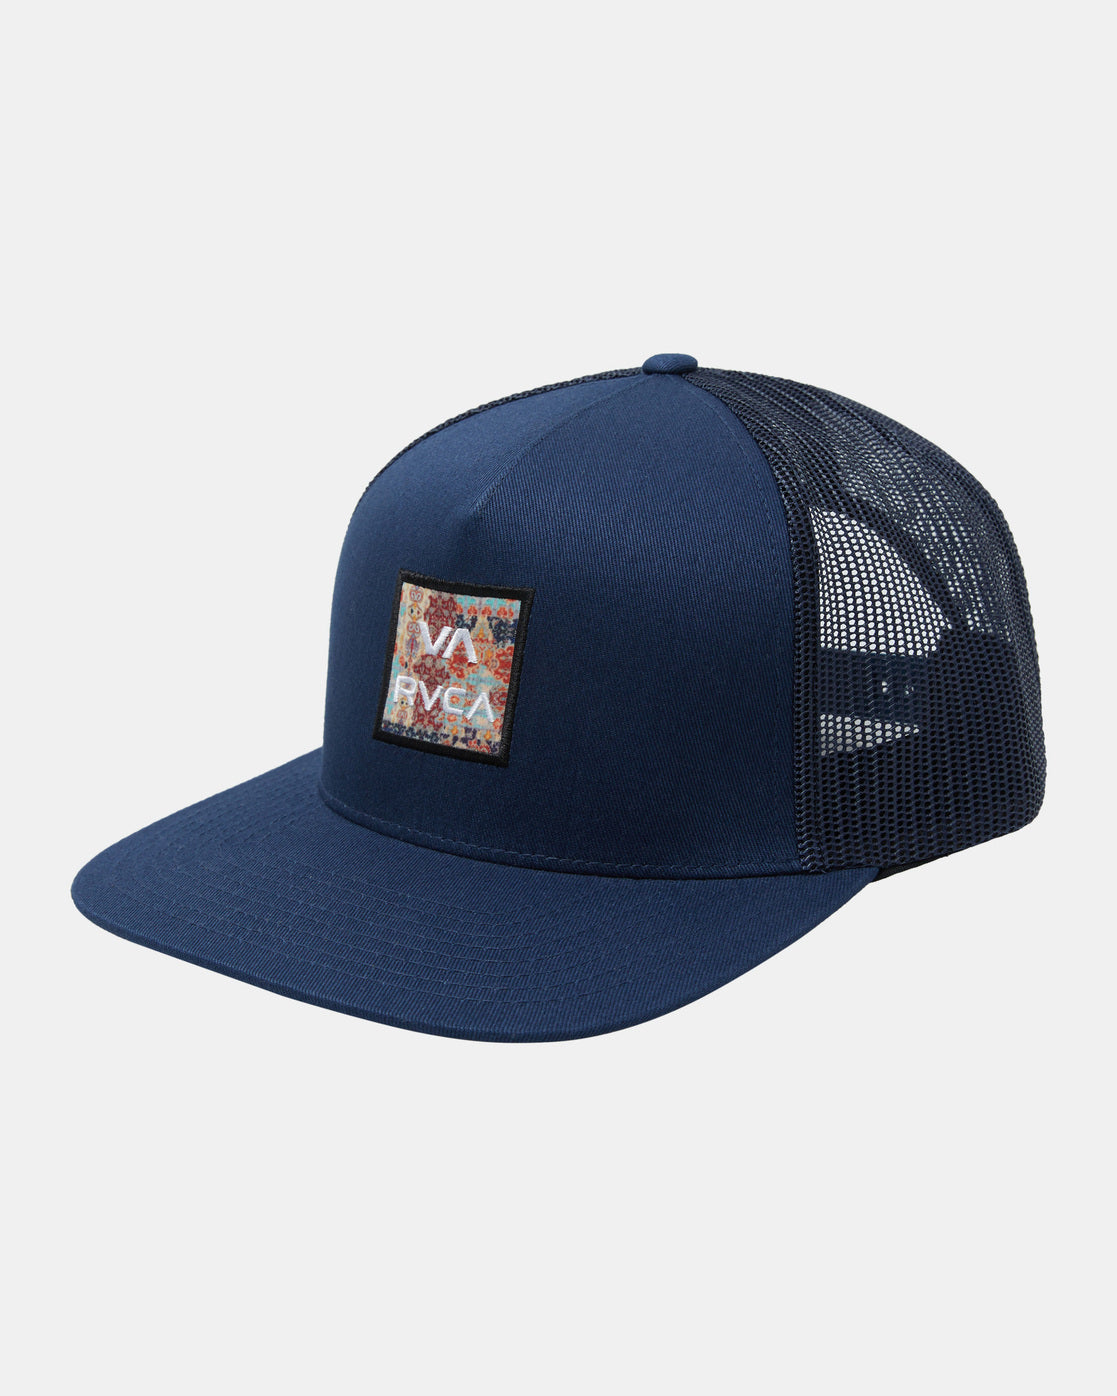 VA All The Way Print Trucker Hat - Navy Blue